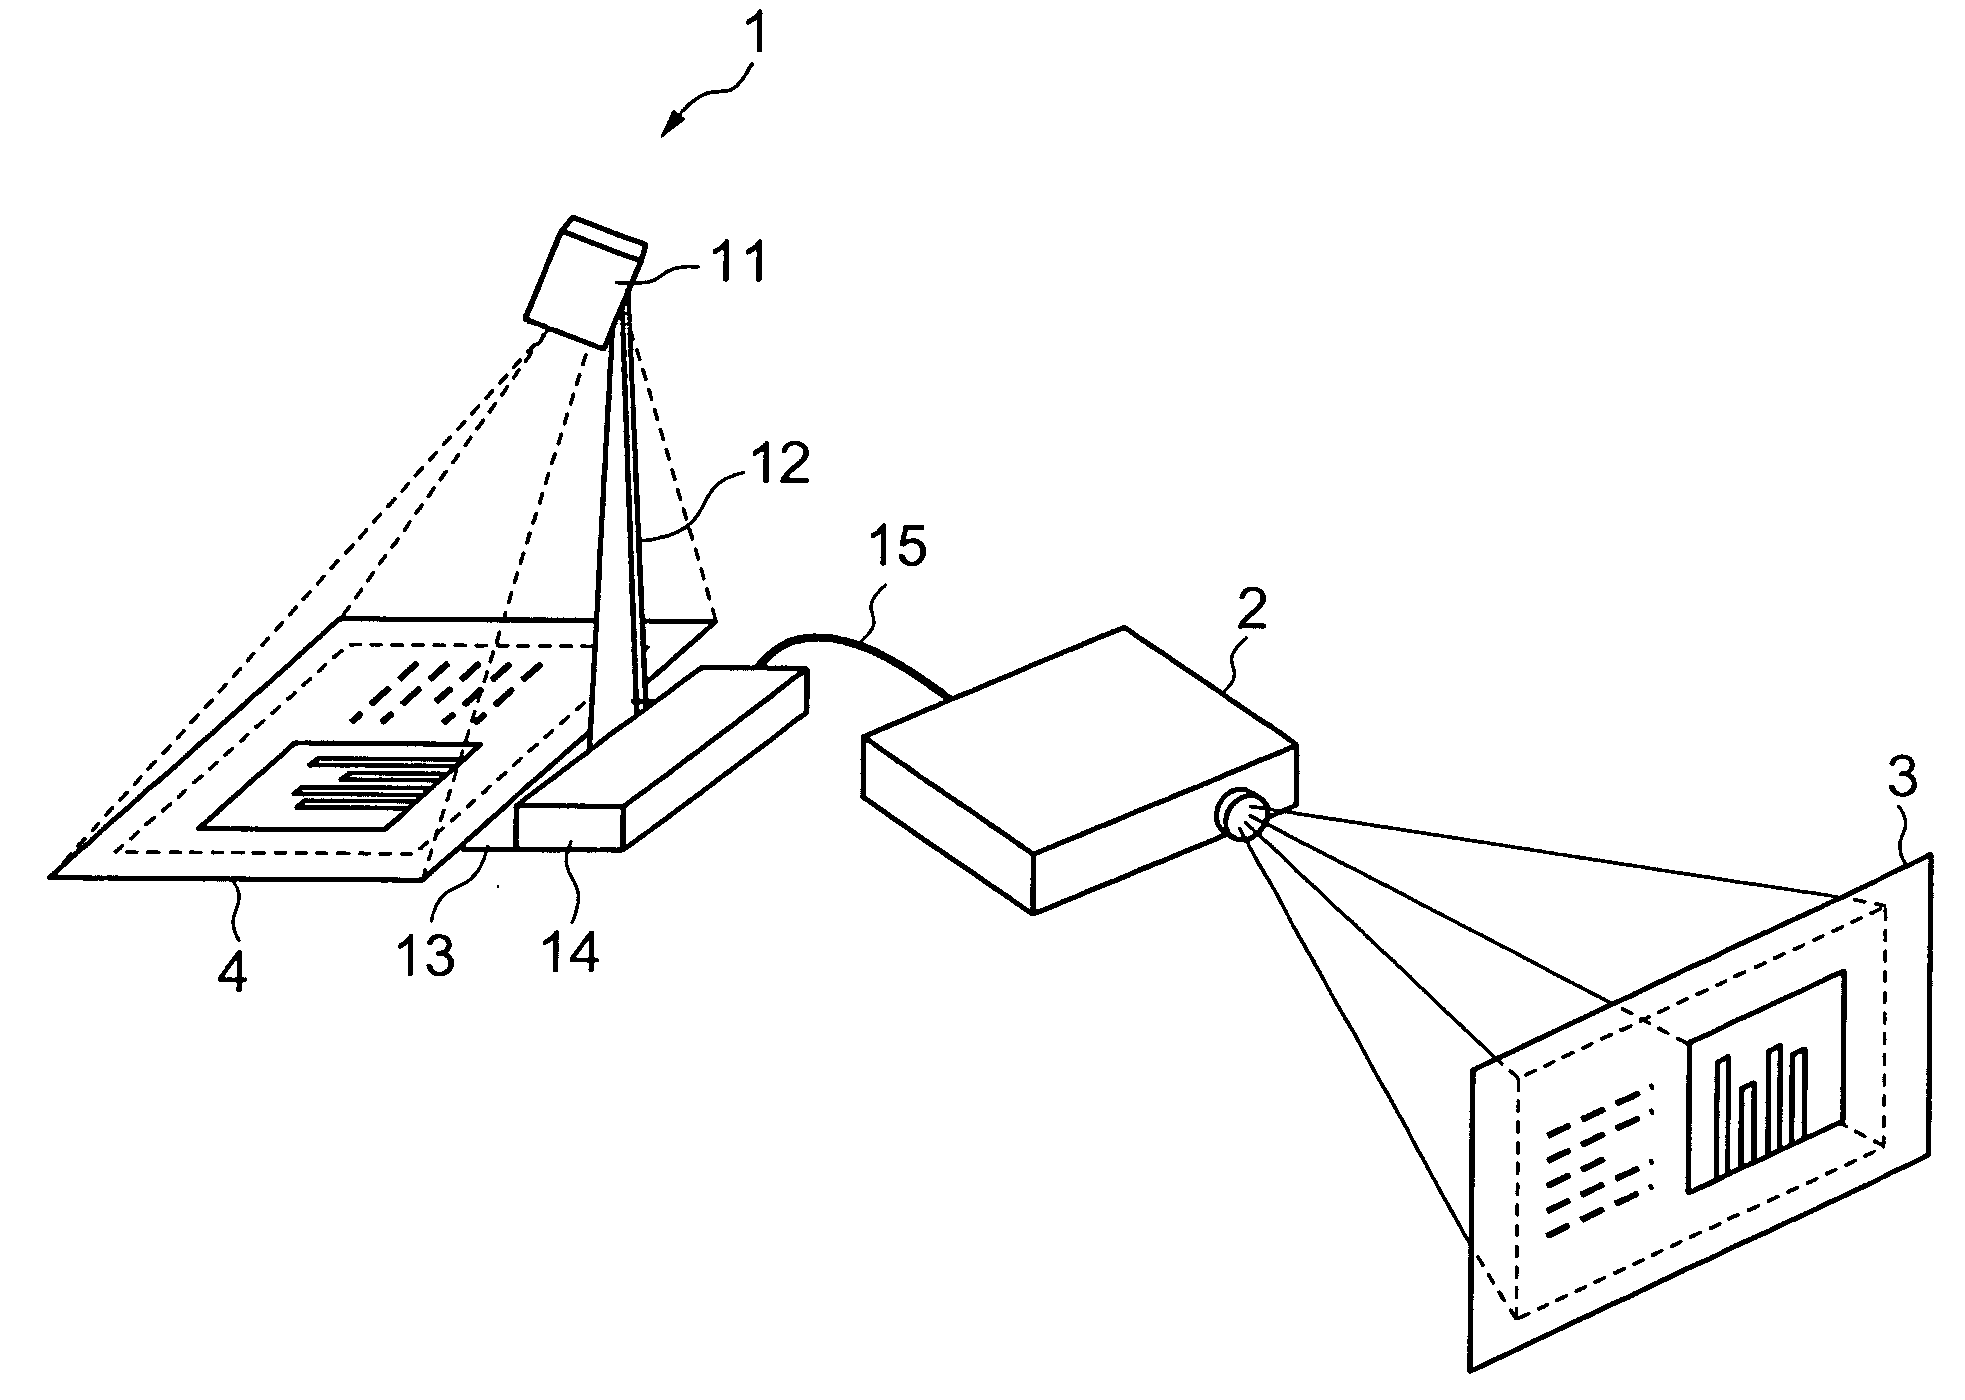 Imaging apparatus, image processing apparatus, image processing method of imaging apparatus and computer program